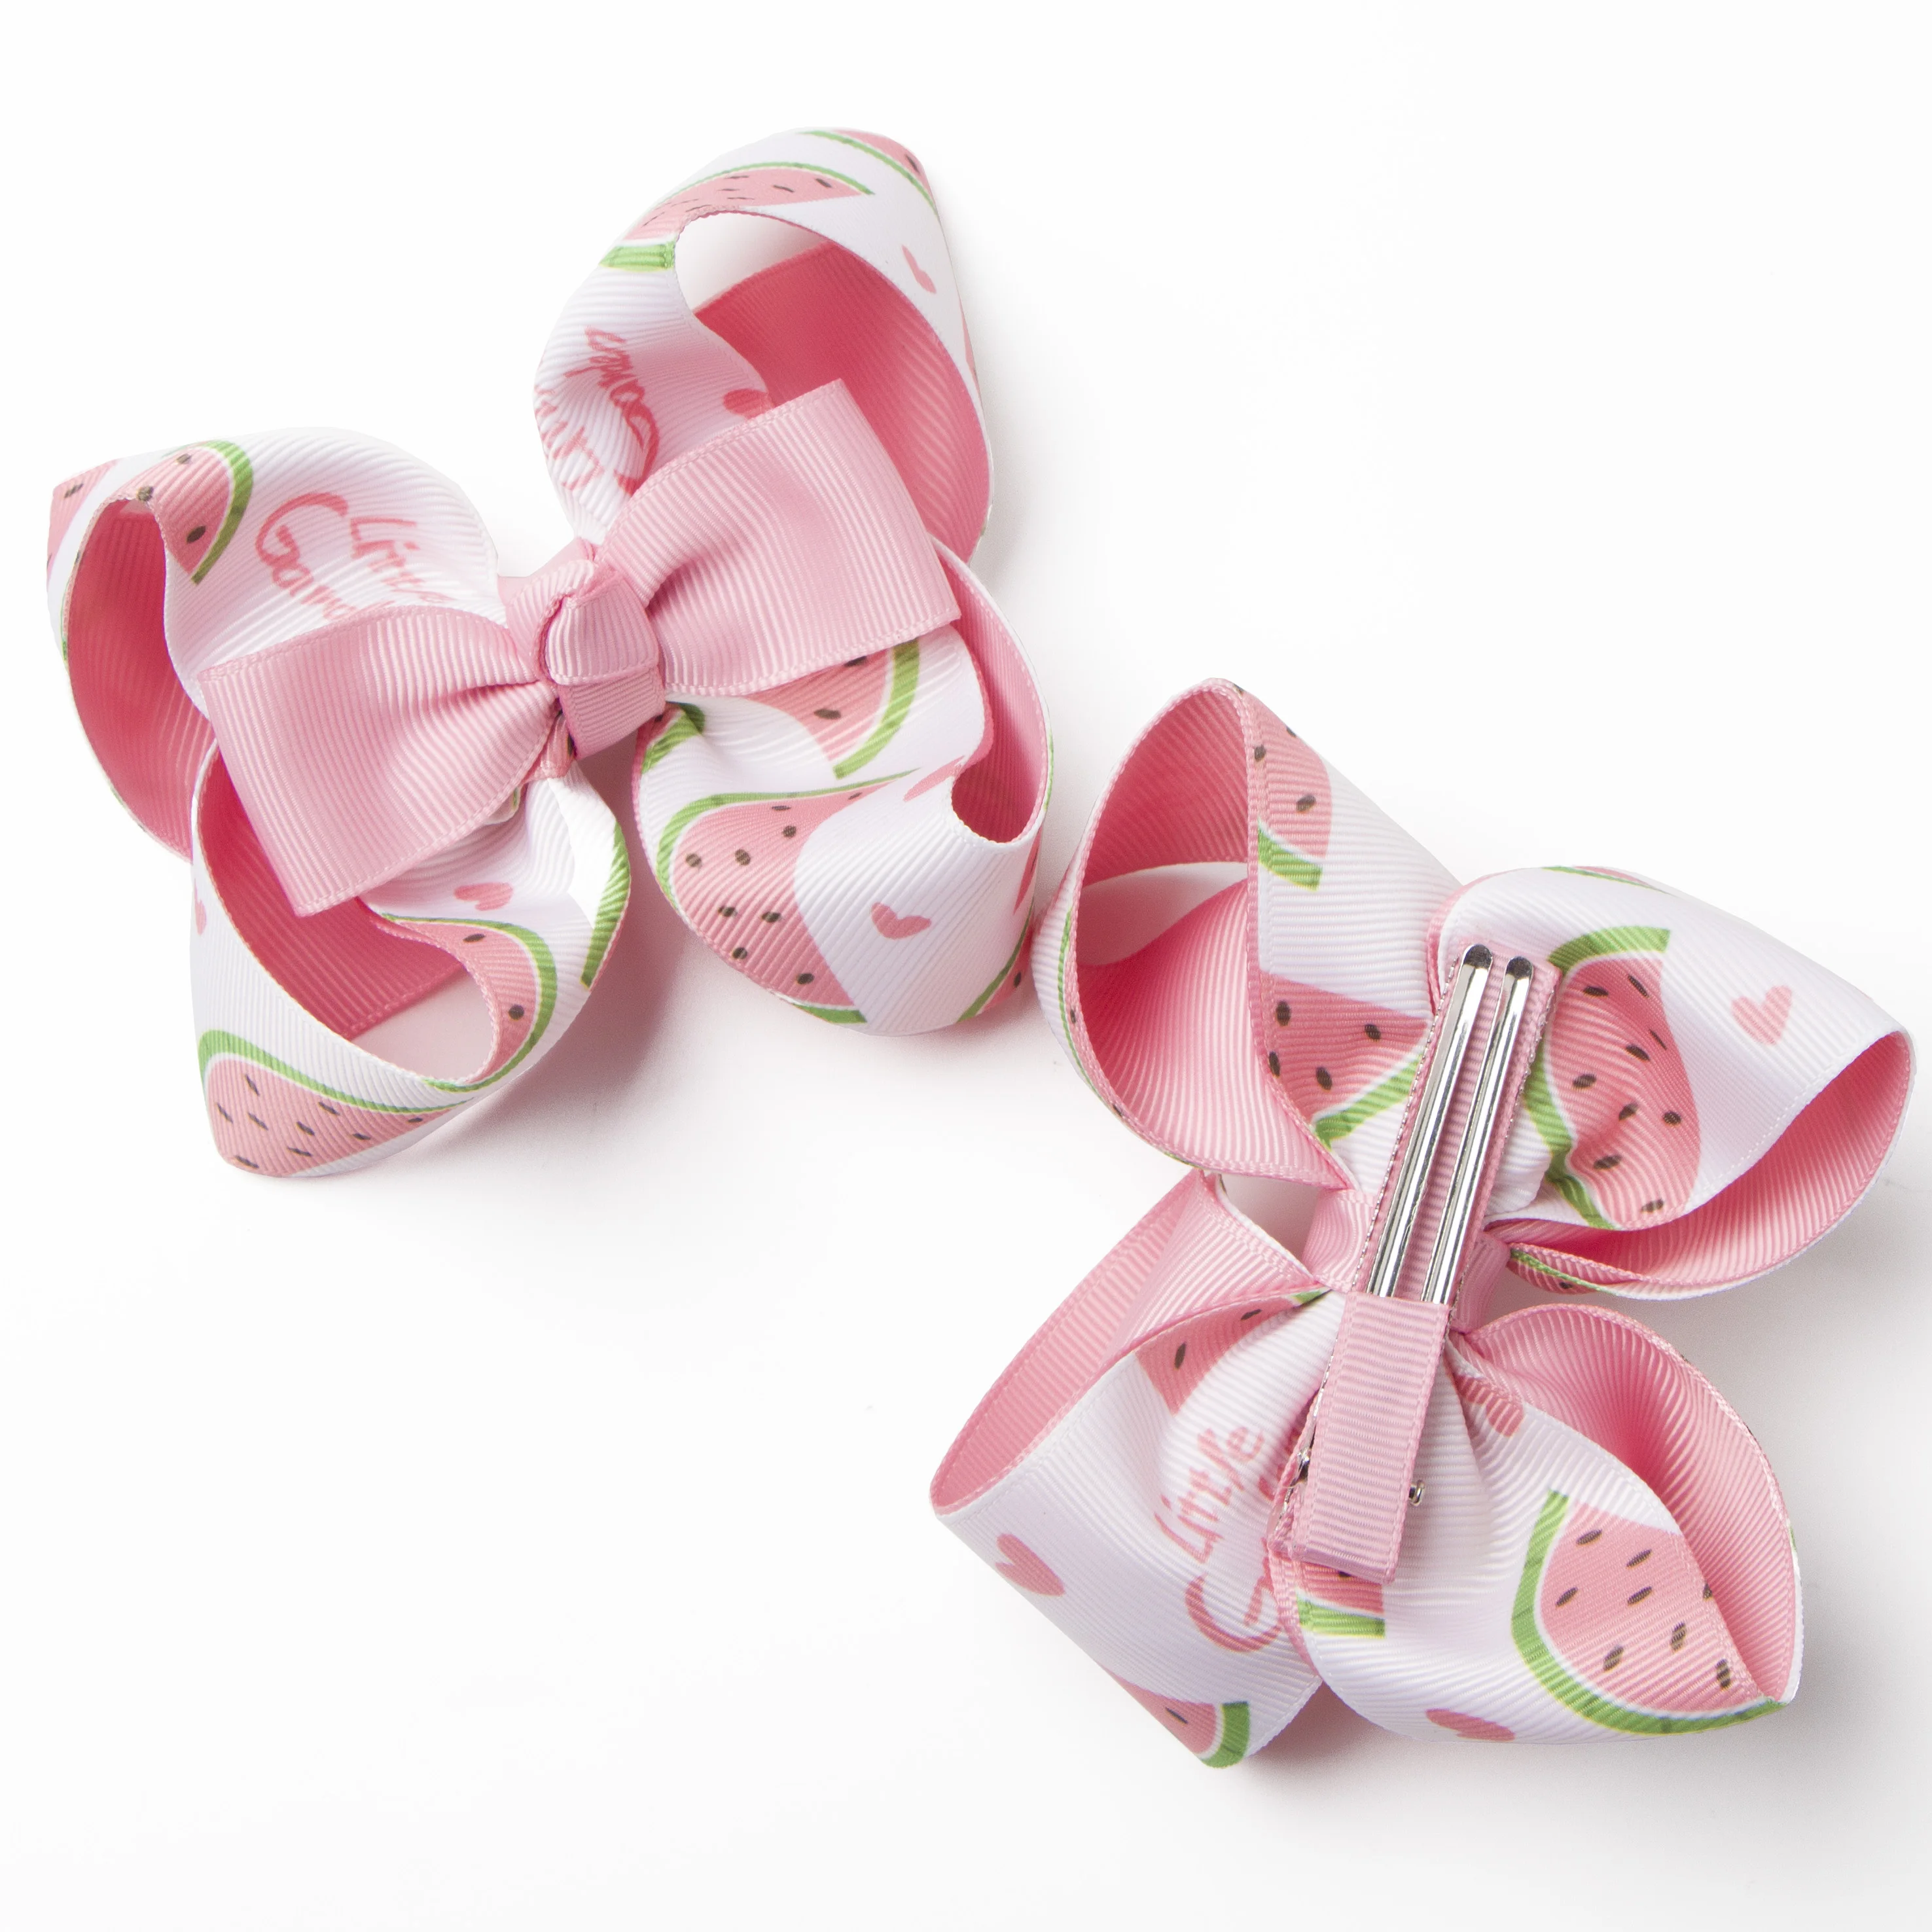 ribbons and bows wholesale